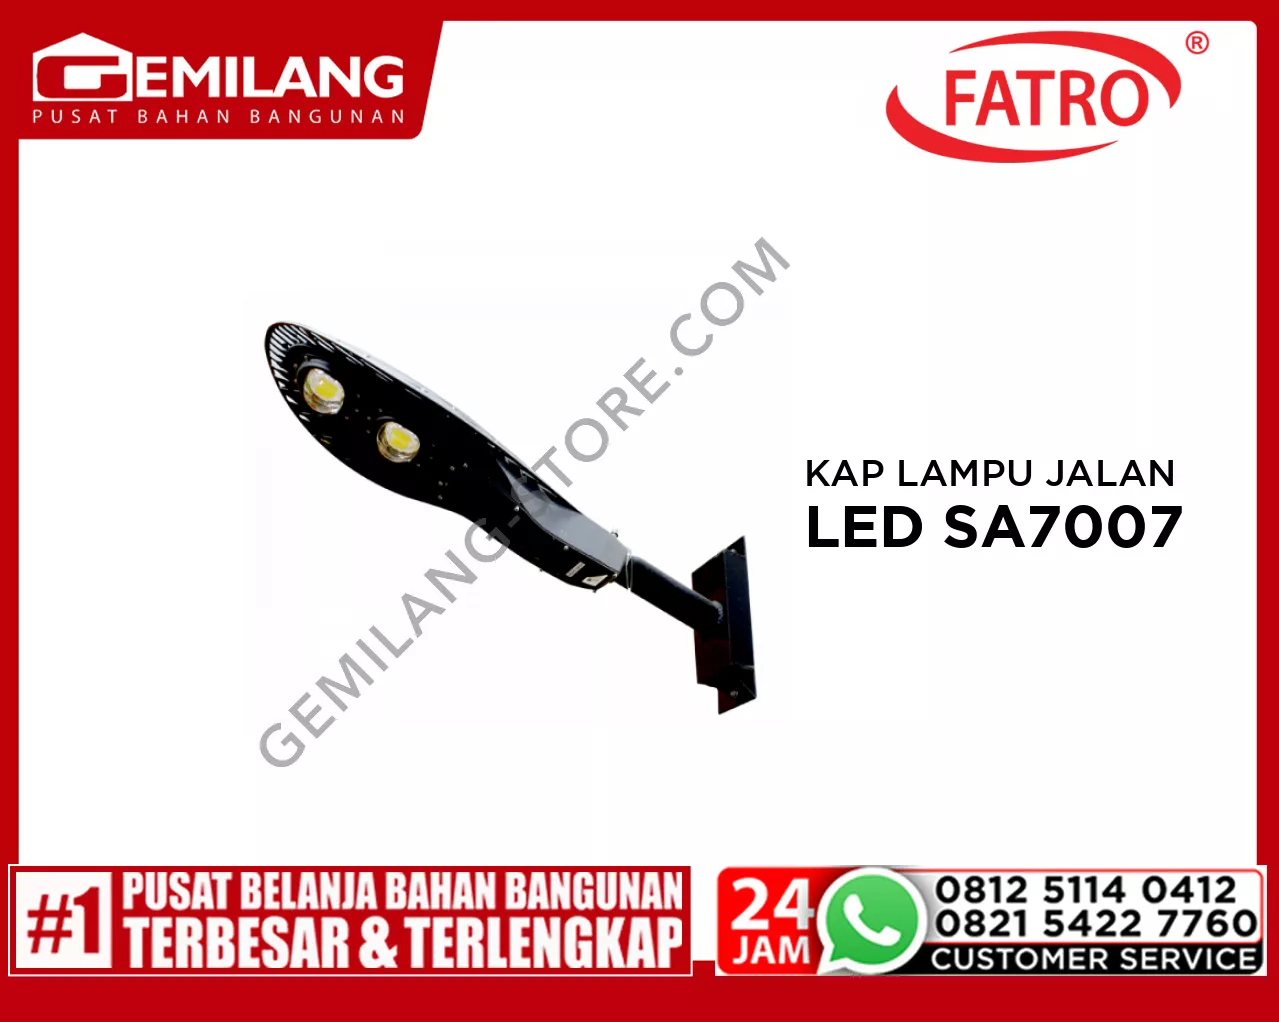 FATRO KAP LAMPU JALAN LED SA-7007 2x50W/WH